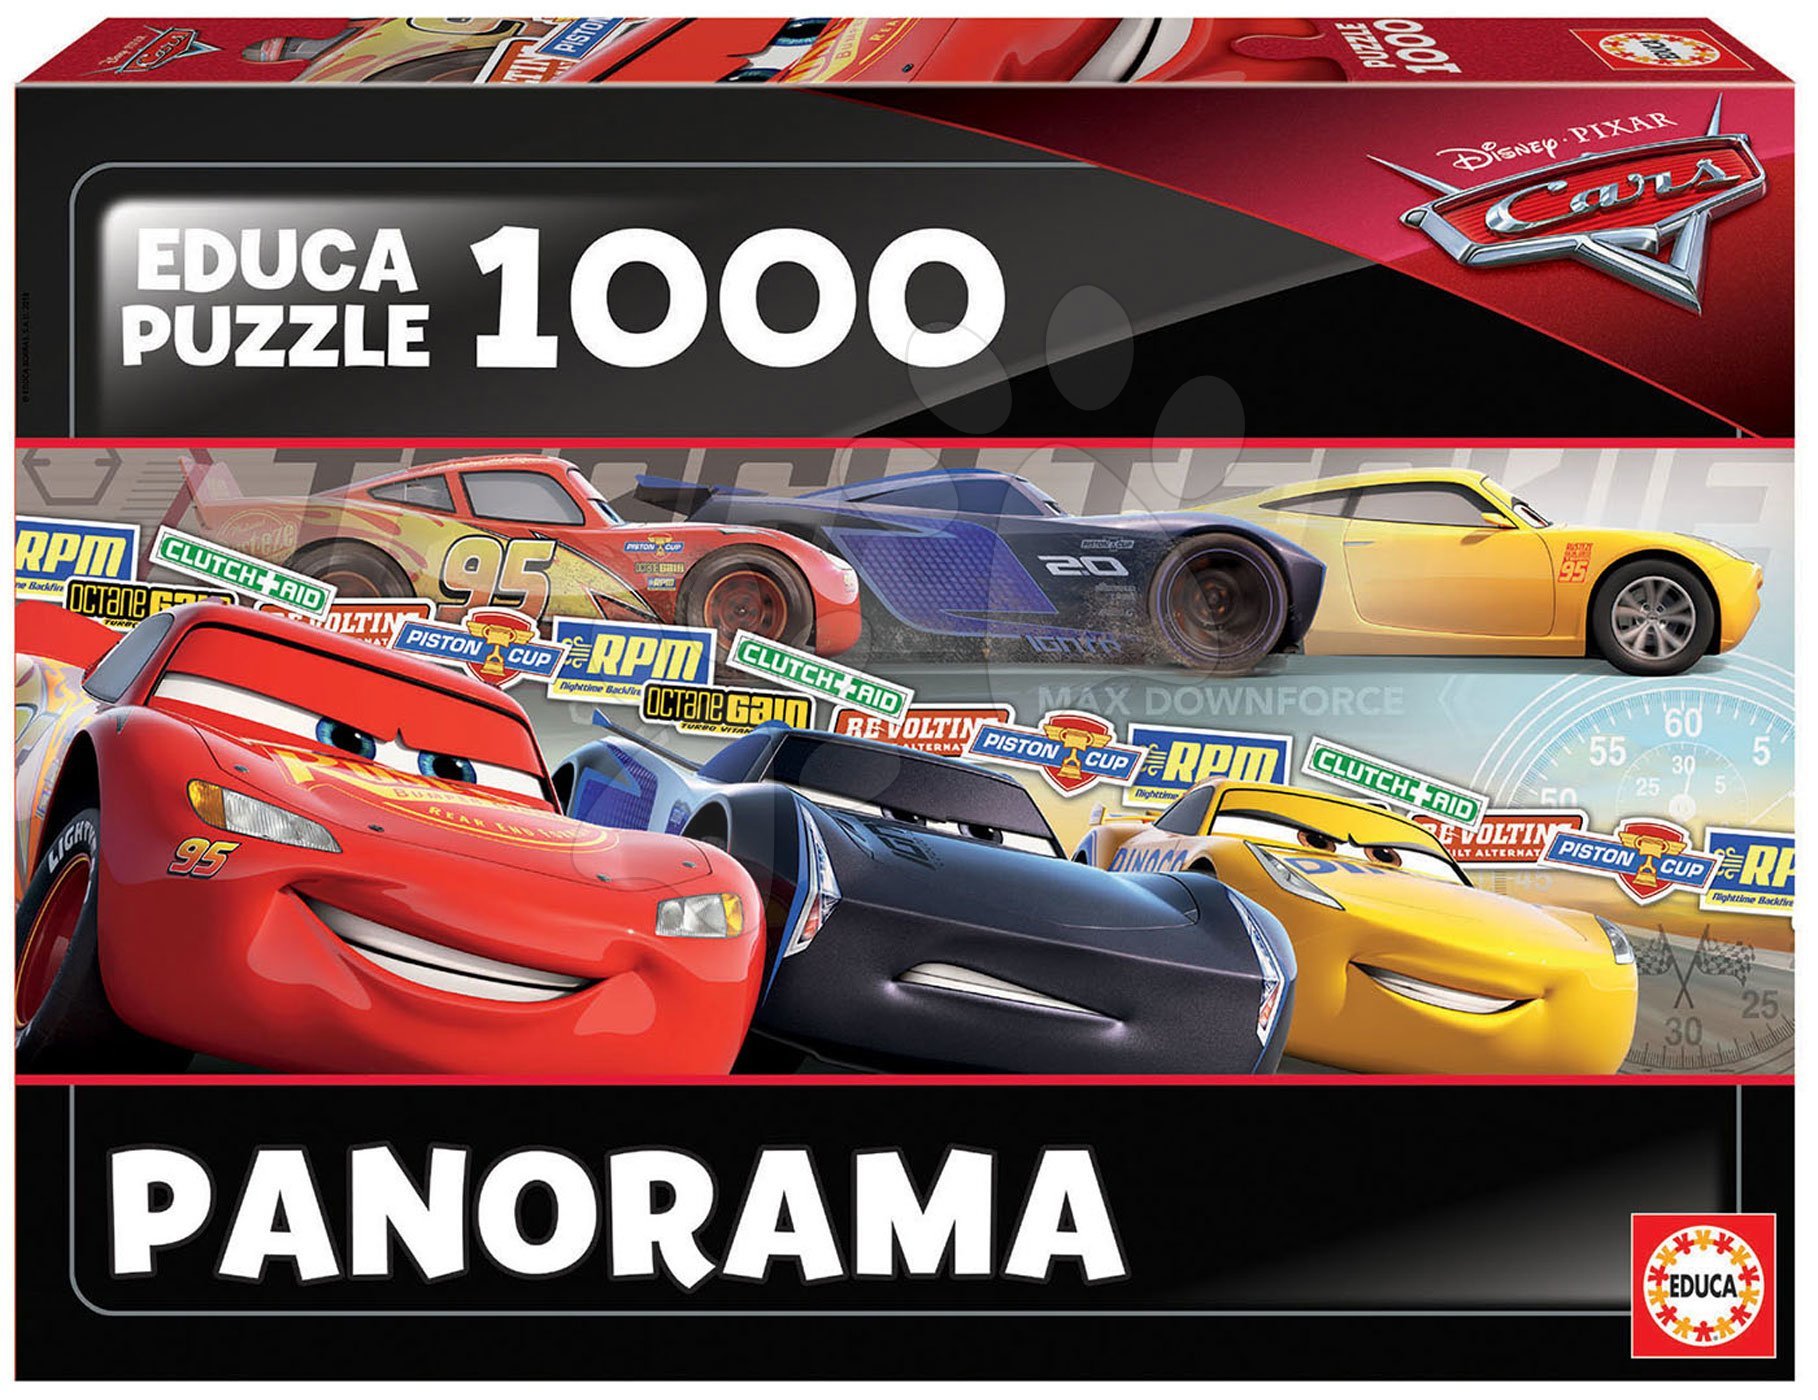 Panorama puzzle - Puzzle Cars Panorama Educa 1000 dílků a Fix lepidlo od 11 let